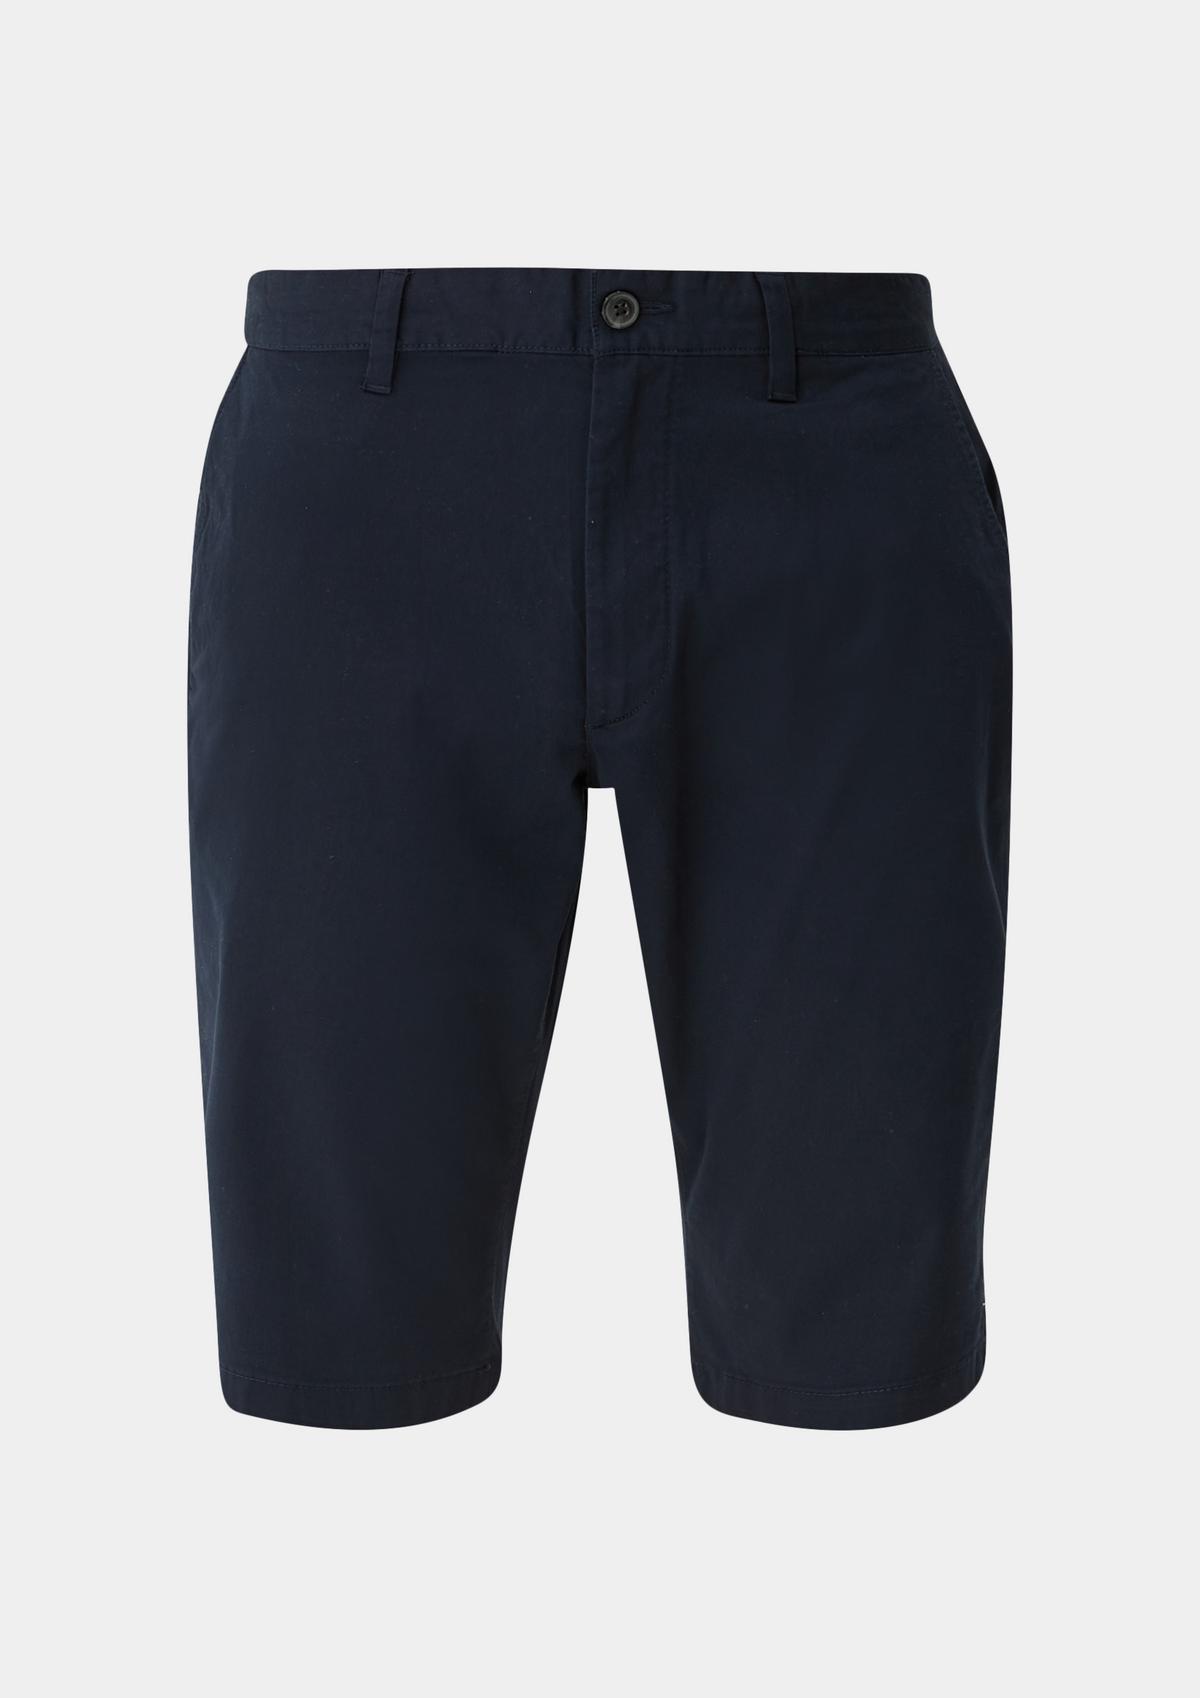 Slim Bermuda fit: - shorts navy chino